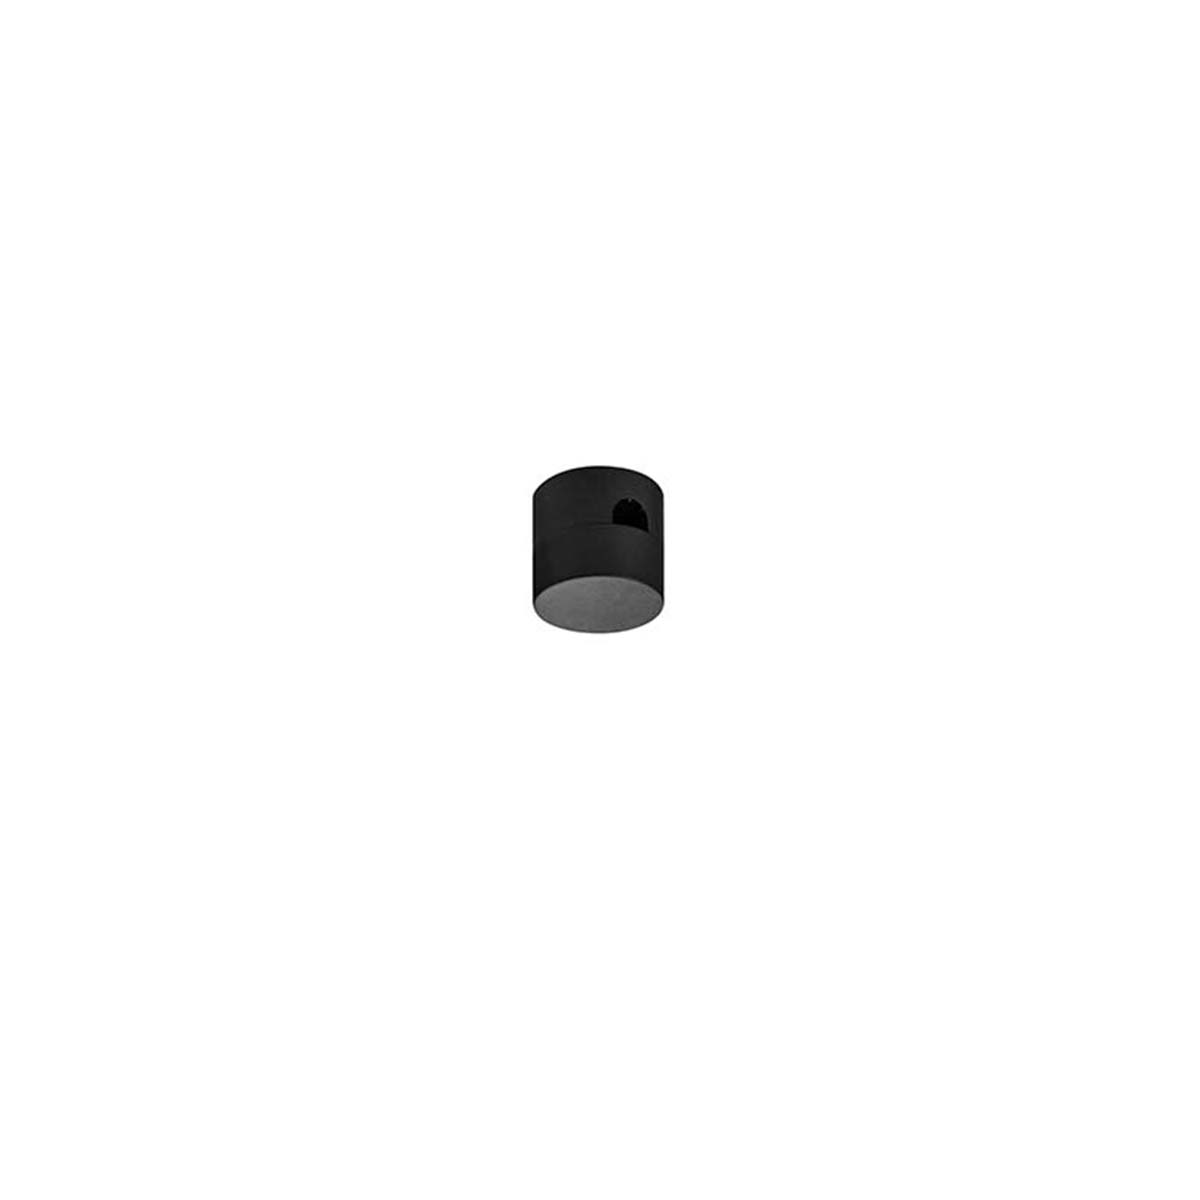 Tangla lighting - TLHG004SB - Ceiling dot mix and match design  - black